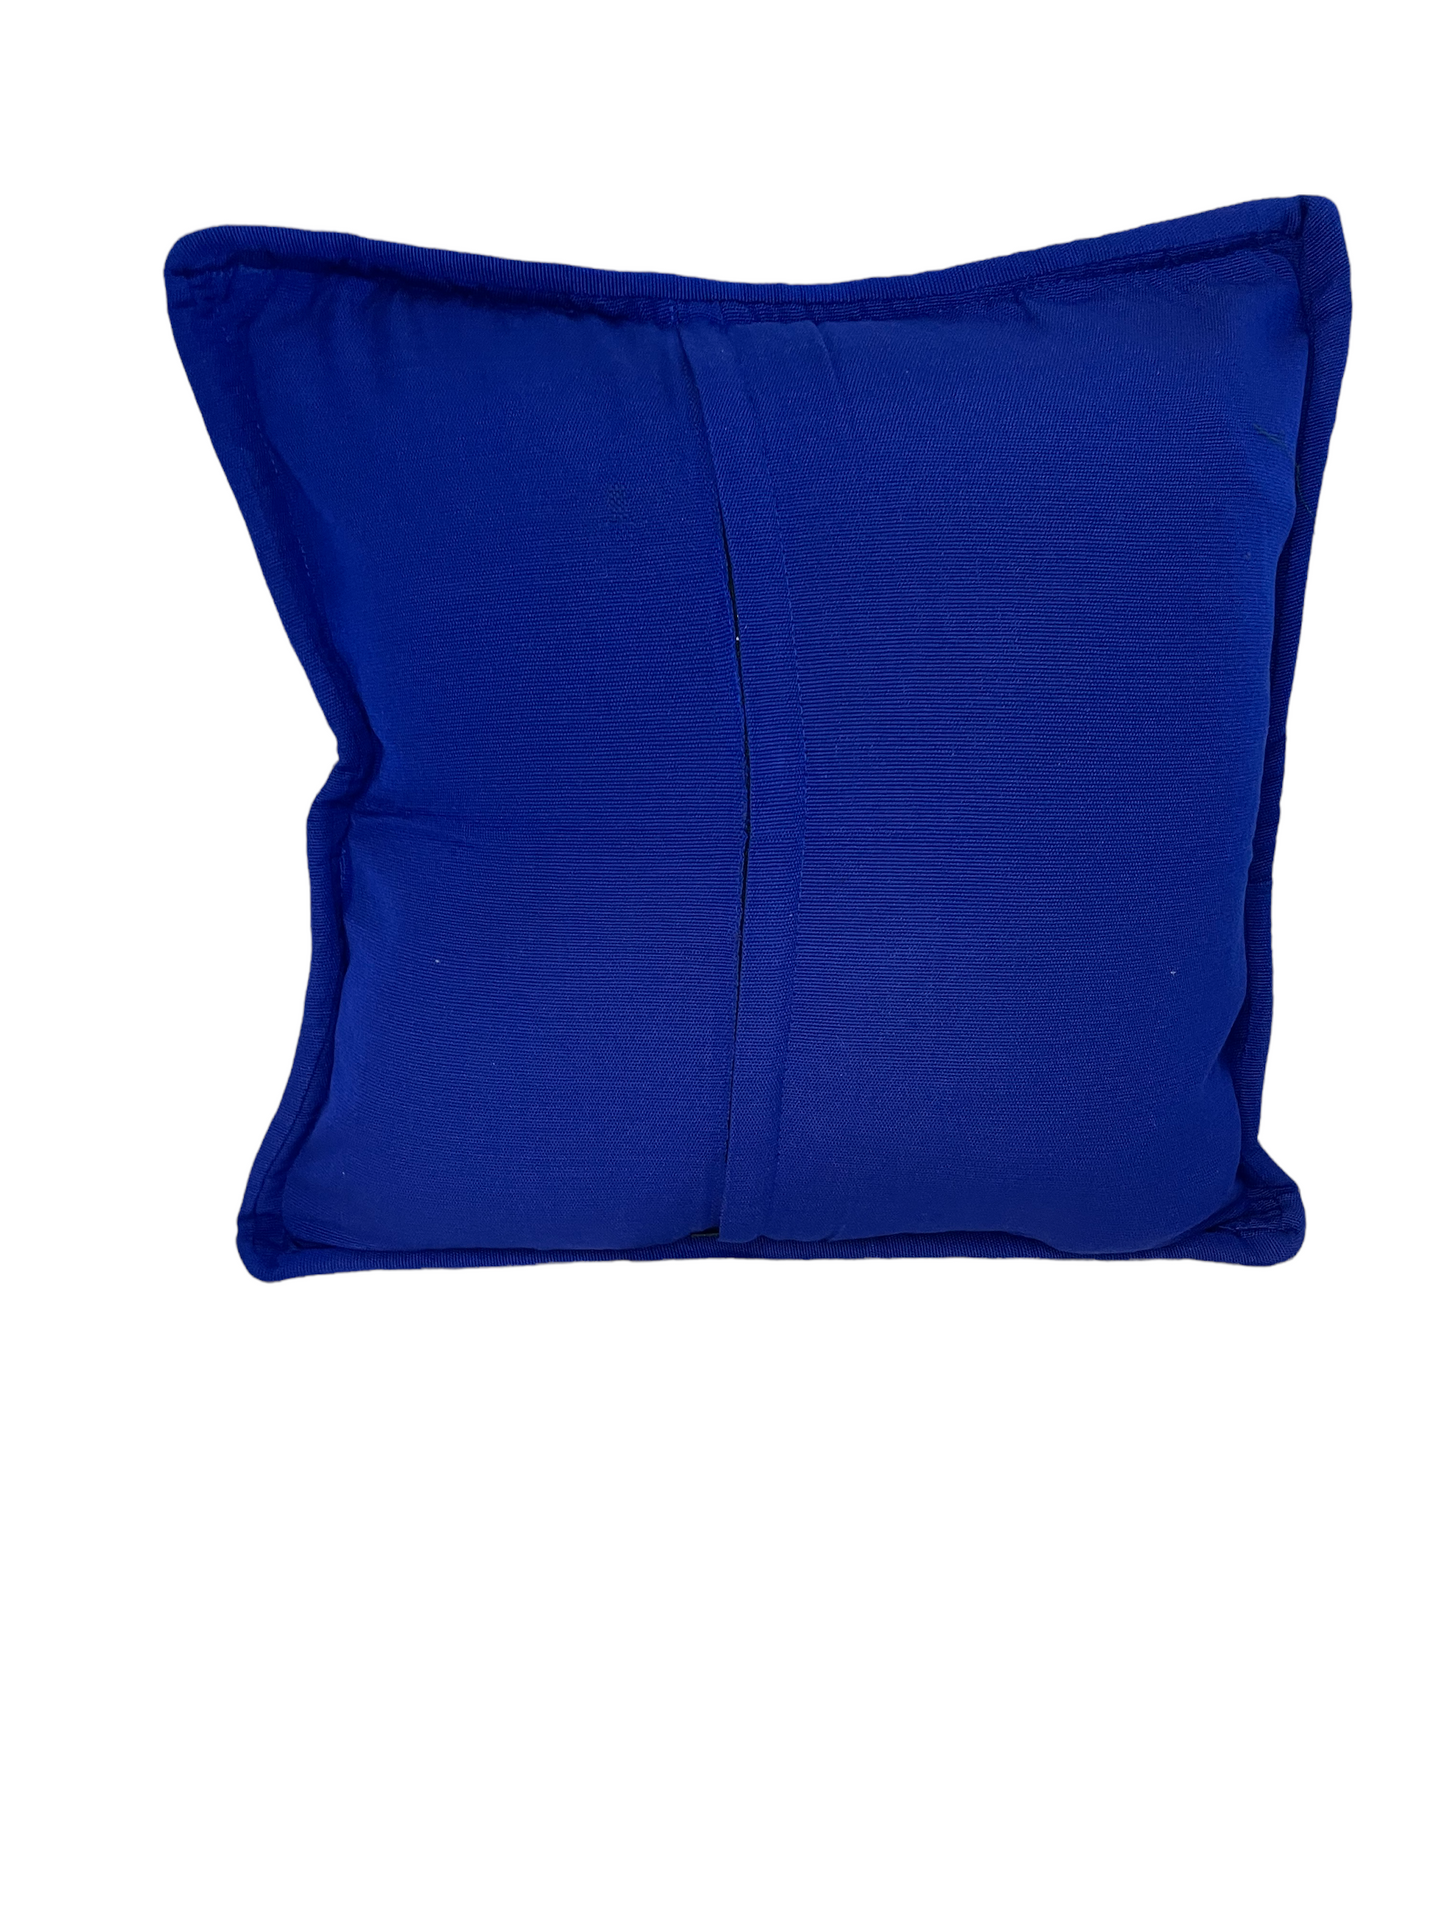 18 x 18 Royal Blue Pillow Cover